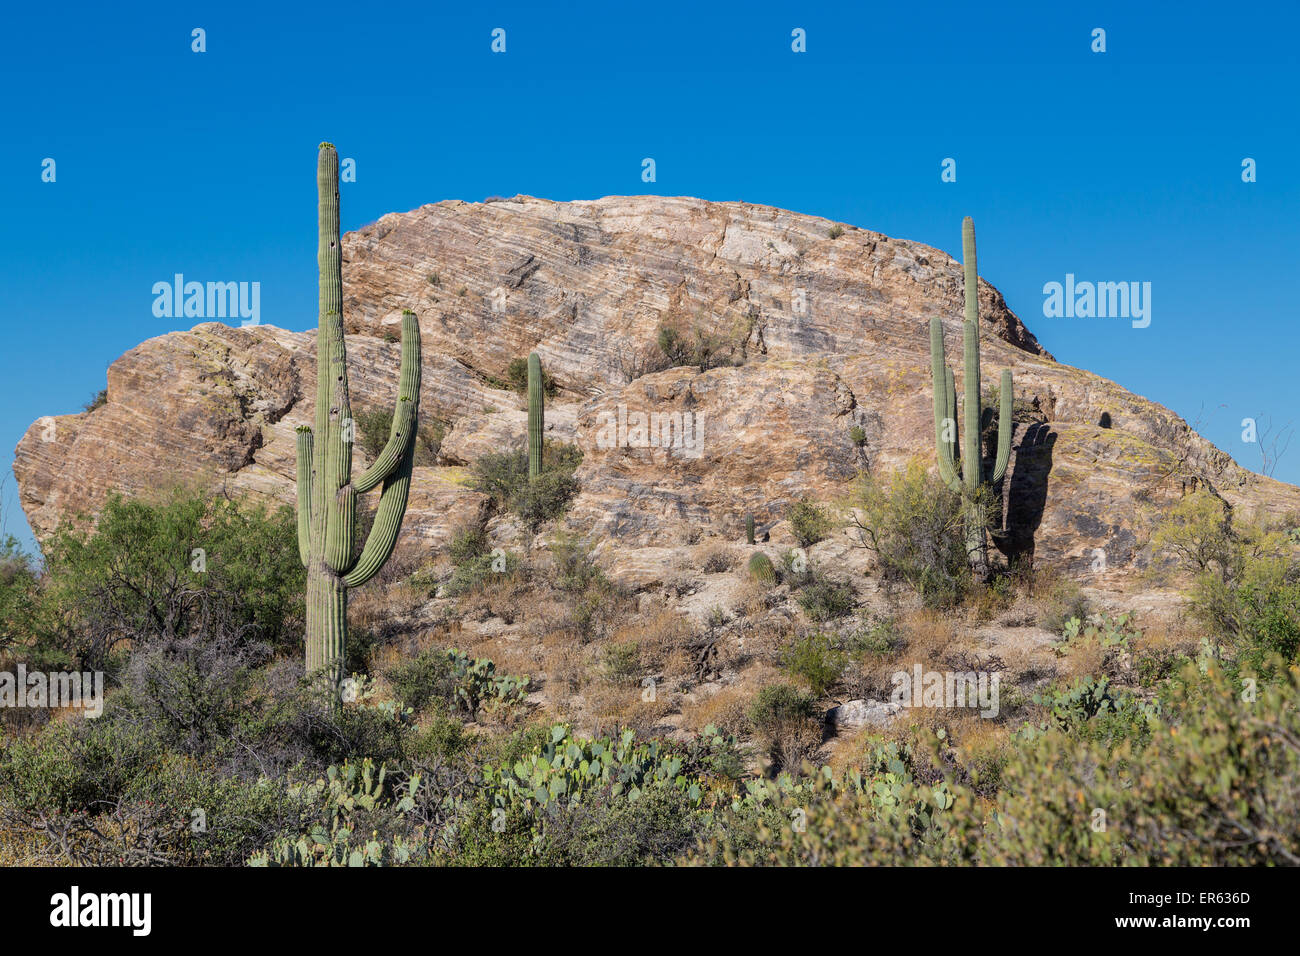 Saguaro cactuses (Carnegiea gigantea) on a large rock, Sonoran Desert, Tucson, Arizona, USA Stock Photo